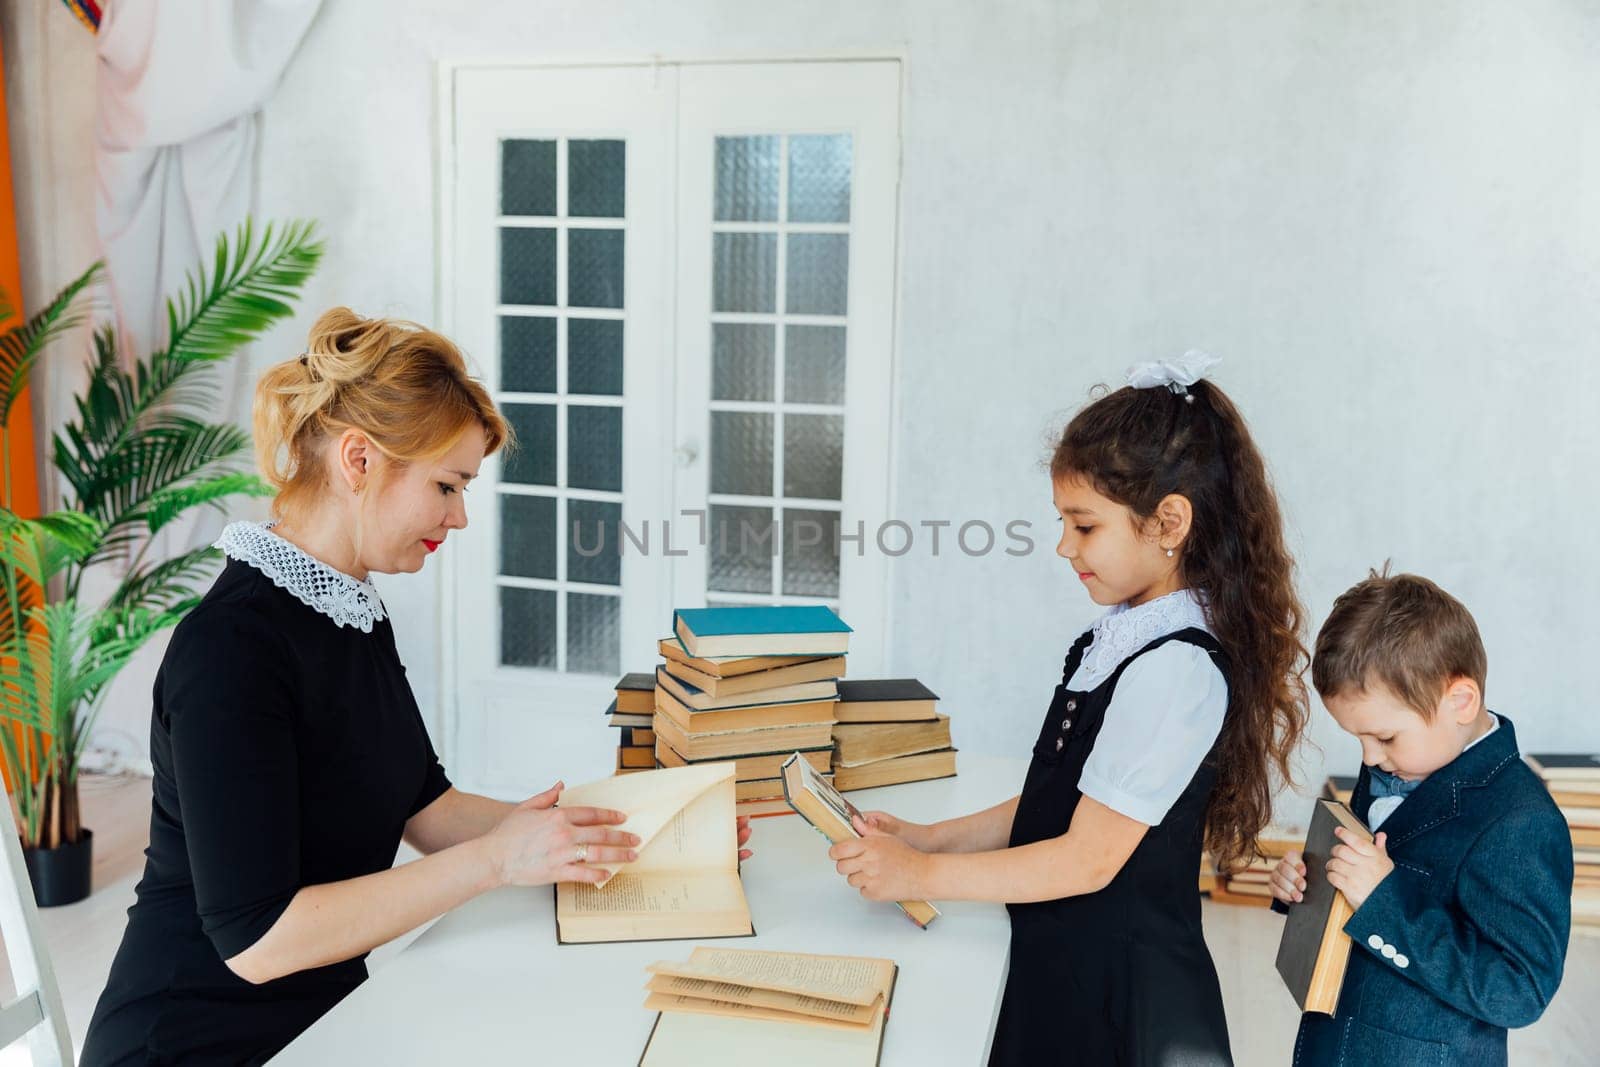 Female teacher teaching children in school classroom by Simakov